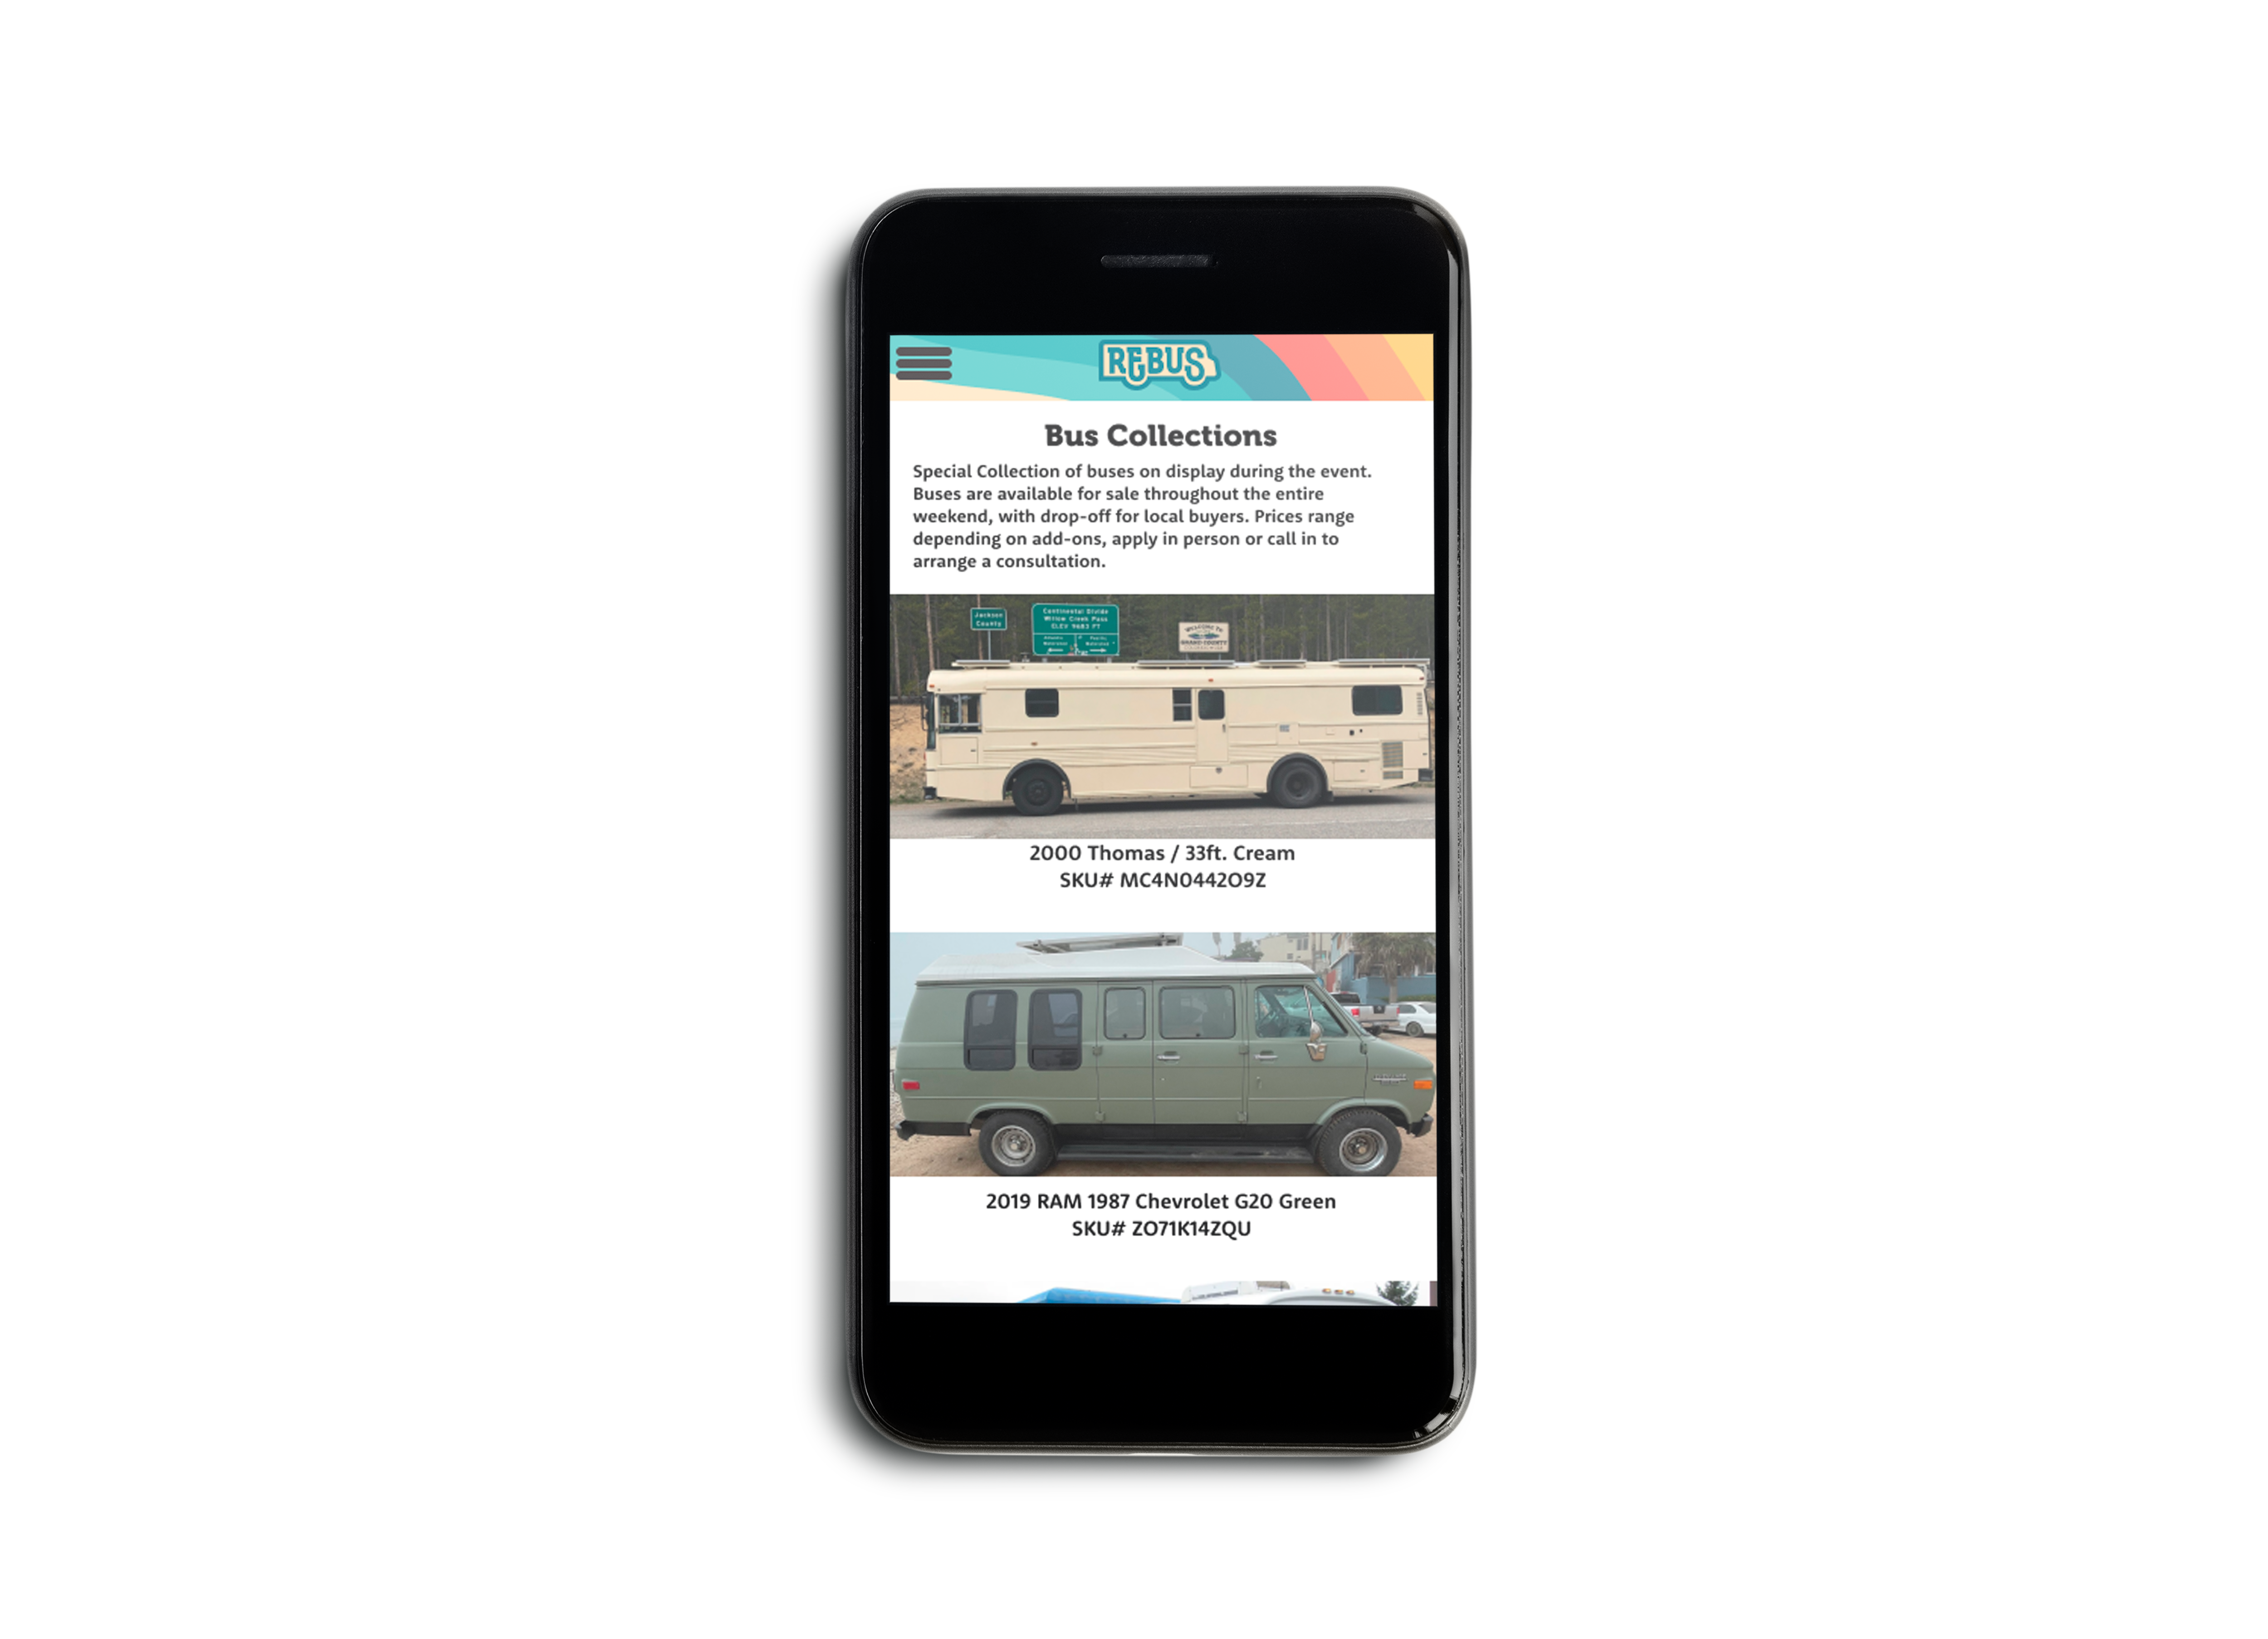 REBUS' mobile website bus page